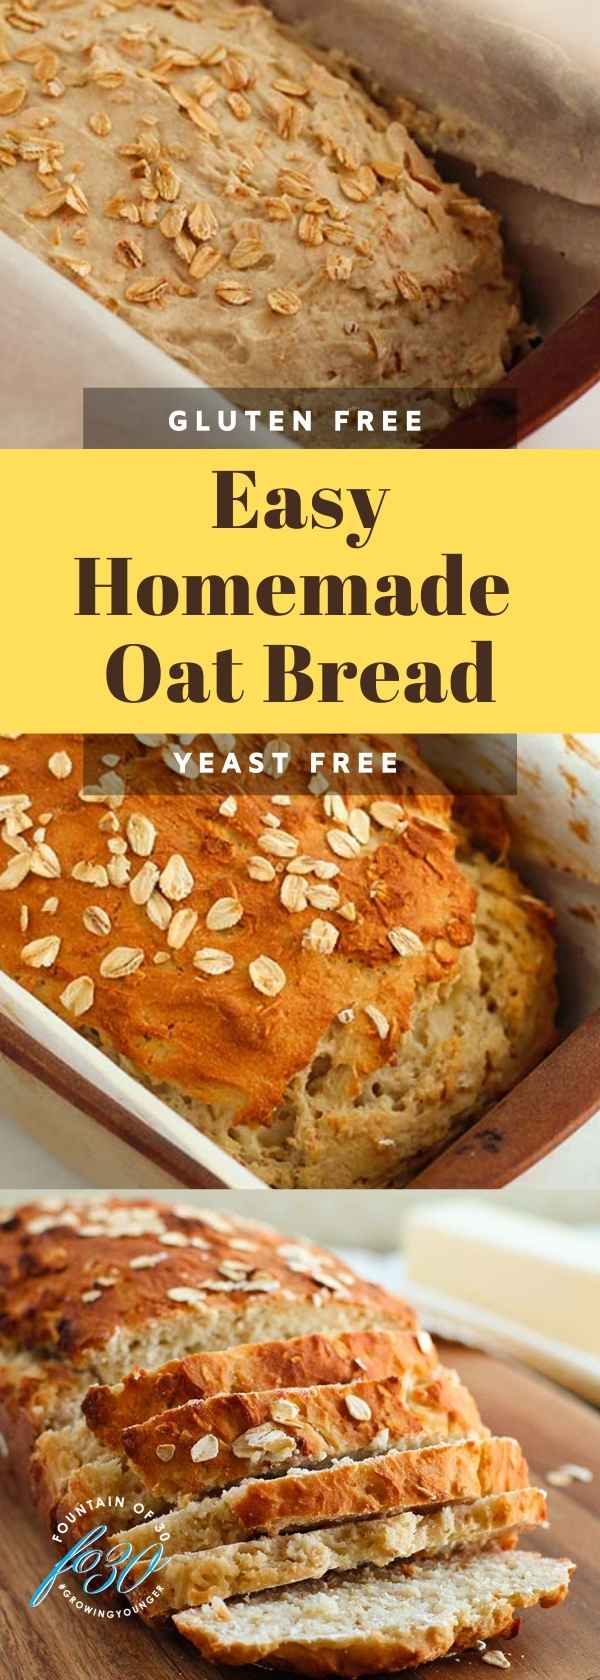 how to make easy homemade oat bread fountainof30